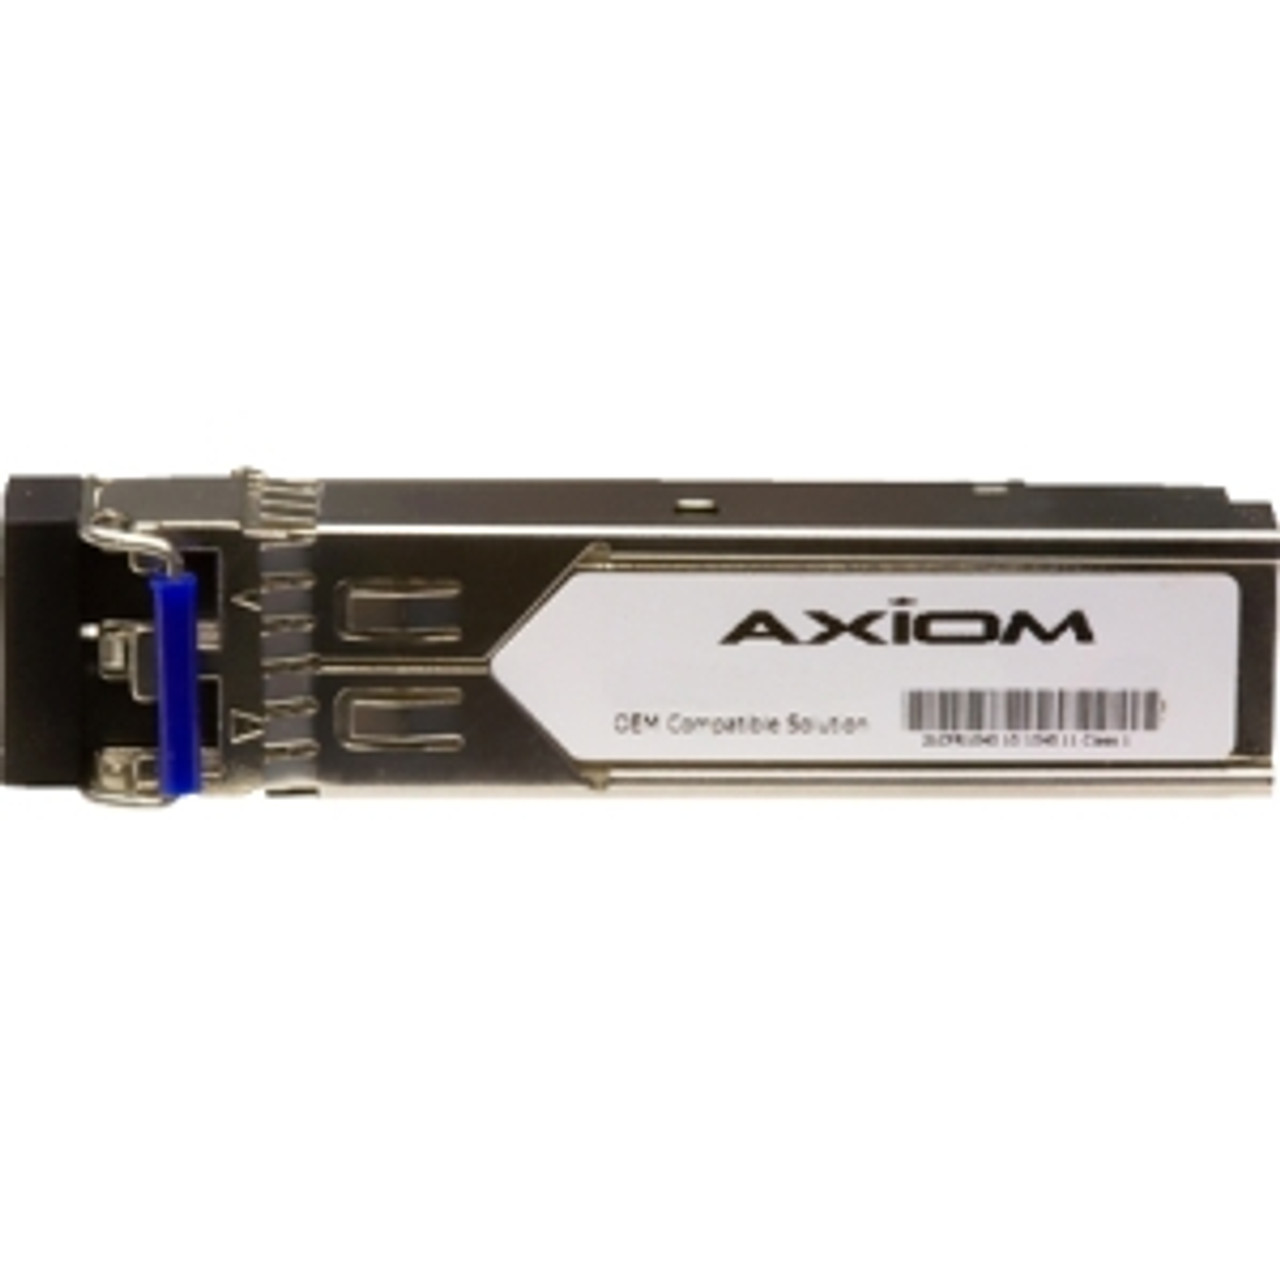 TEG-MGBSX-AX Axiom 1.25Gbps 1000Base-SX Multi-mode Fiber 550m 850nm Duplex LC Connector SFP (mini-GBIC) Transceiver Module for TRENDnet Compatible